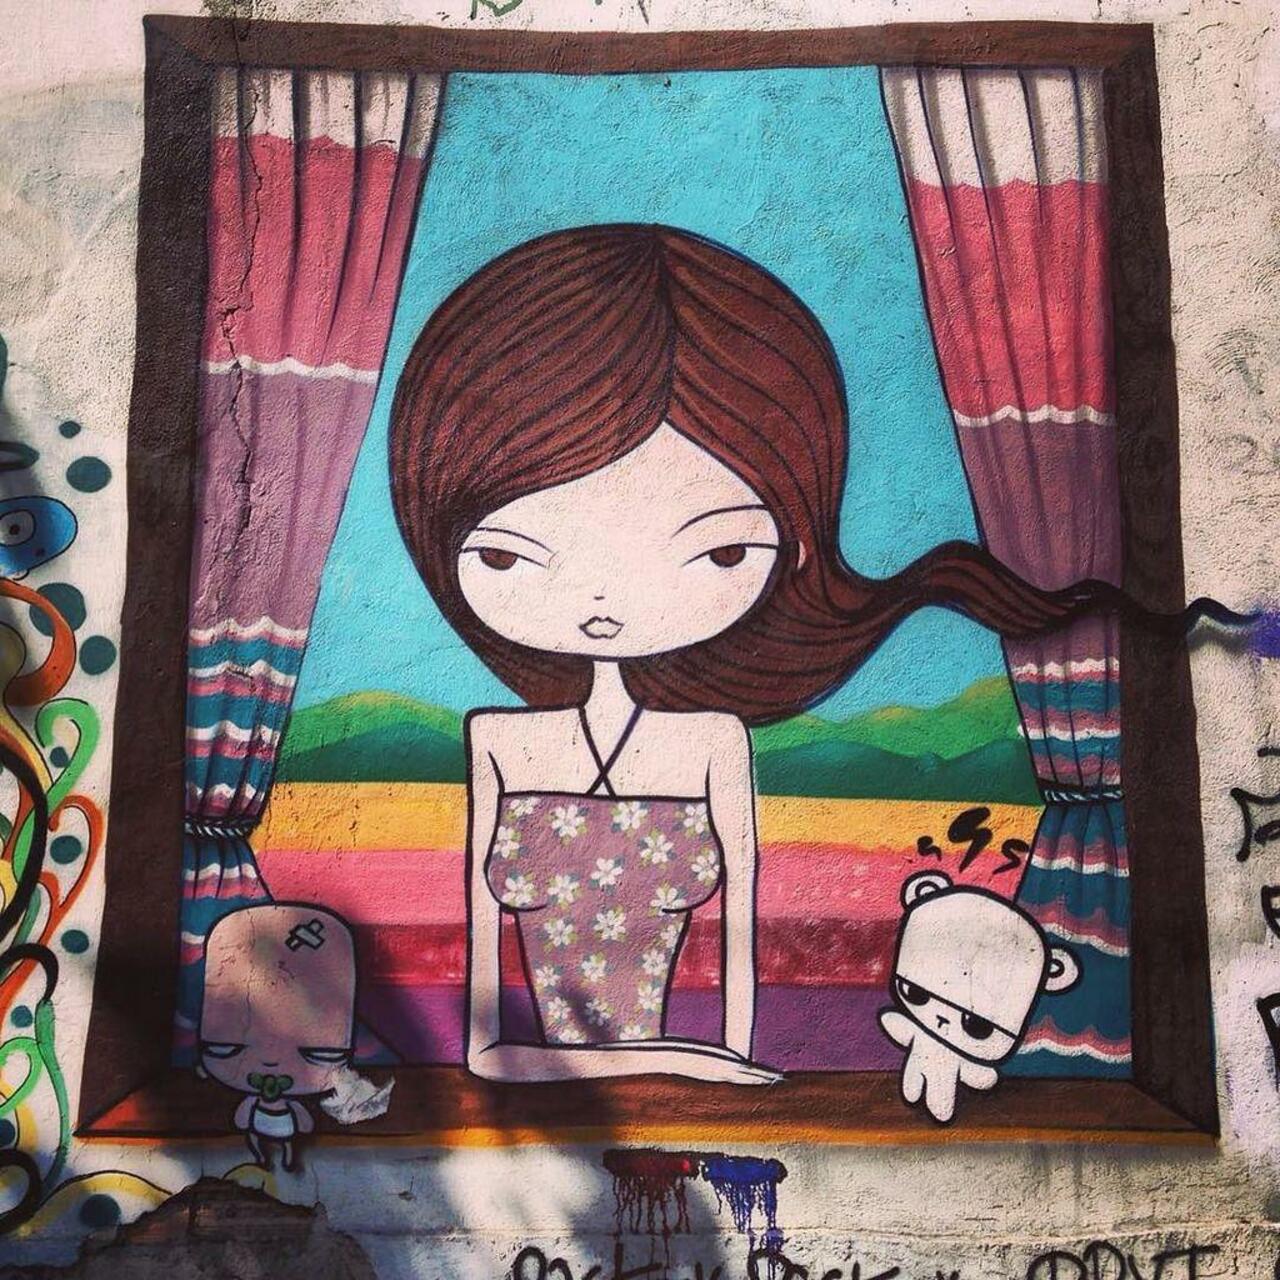 #tozfbc #streetart #urbanart #artederua #arteurbana #streetartrio #pelasruas #olheosmuros #graffiti #graffitiporn #… http://t.co/YUgC8PNH8T